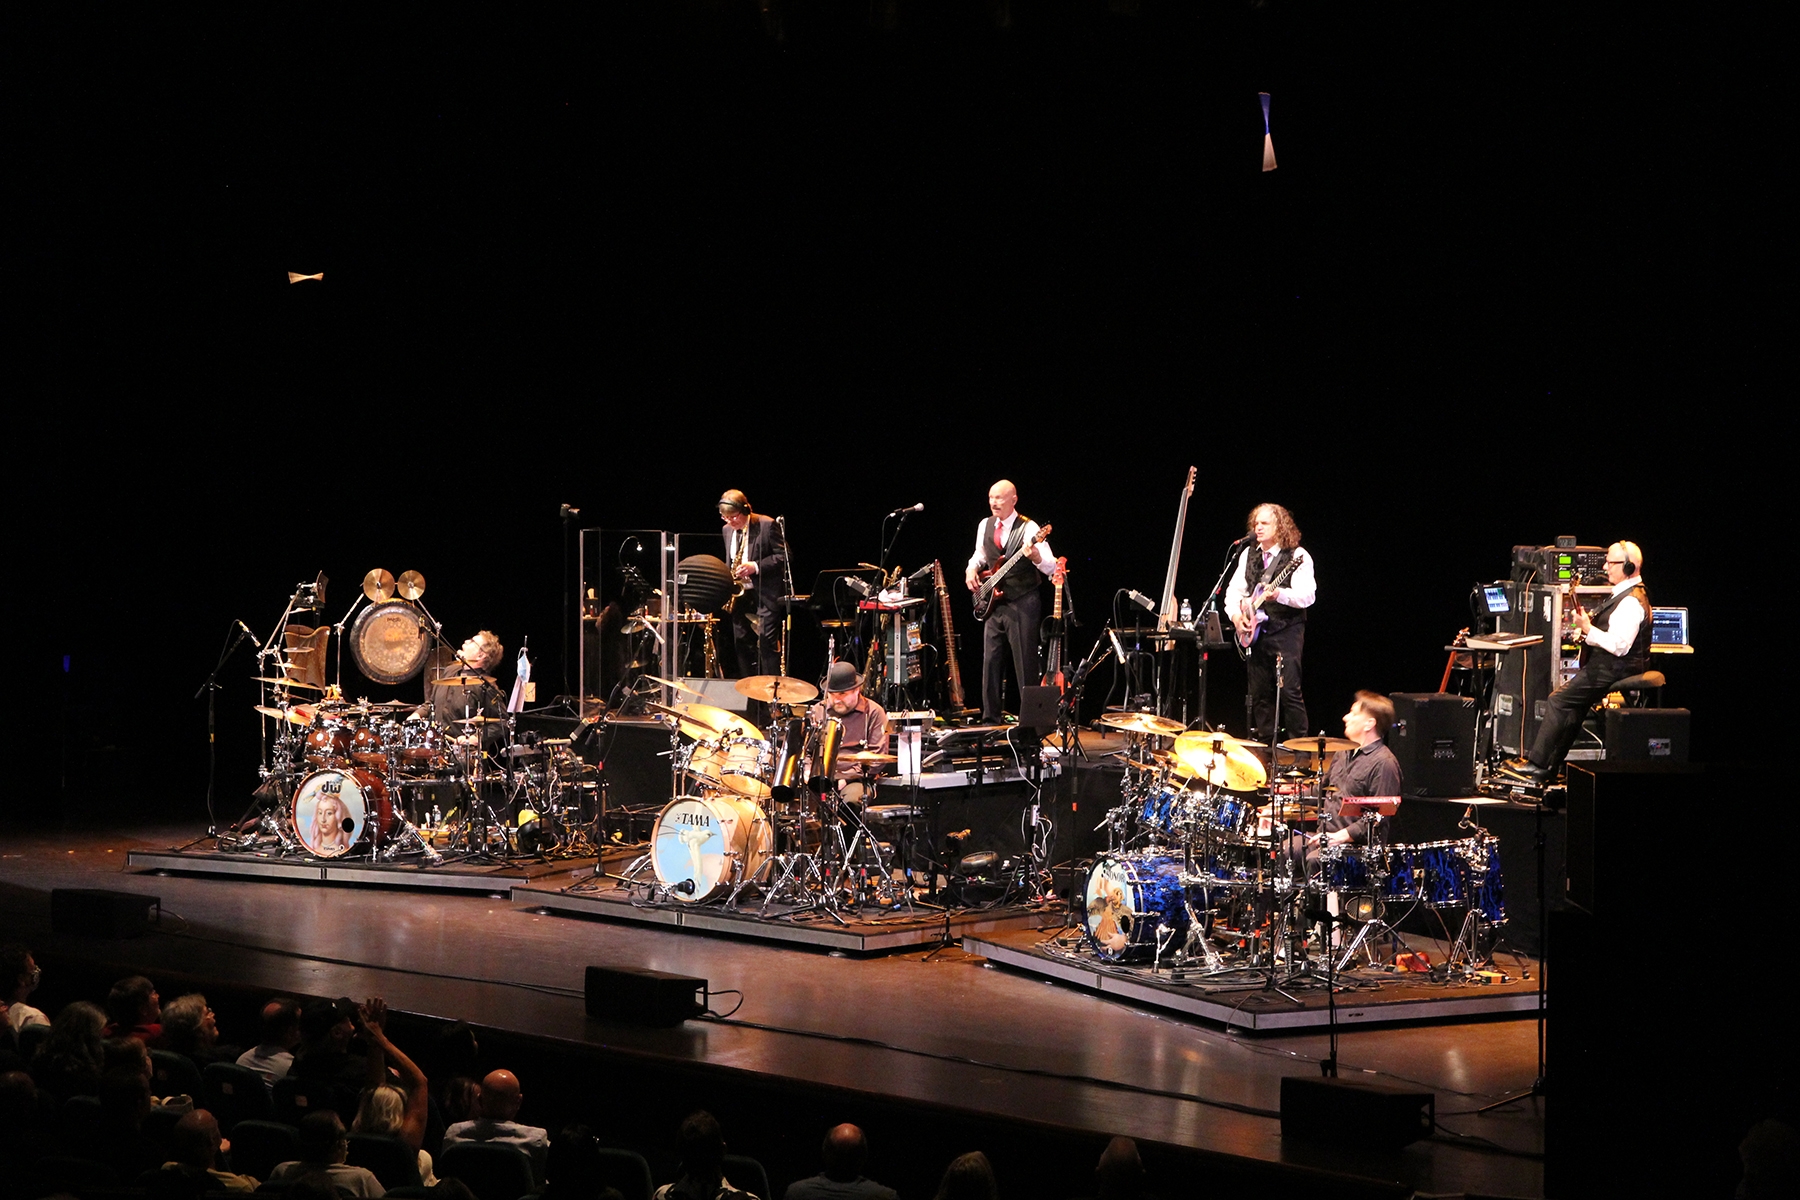 Concert Review King Crimson “Music Is Our Friend” Tour Delray Beach